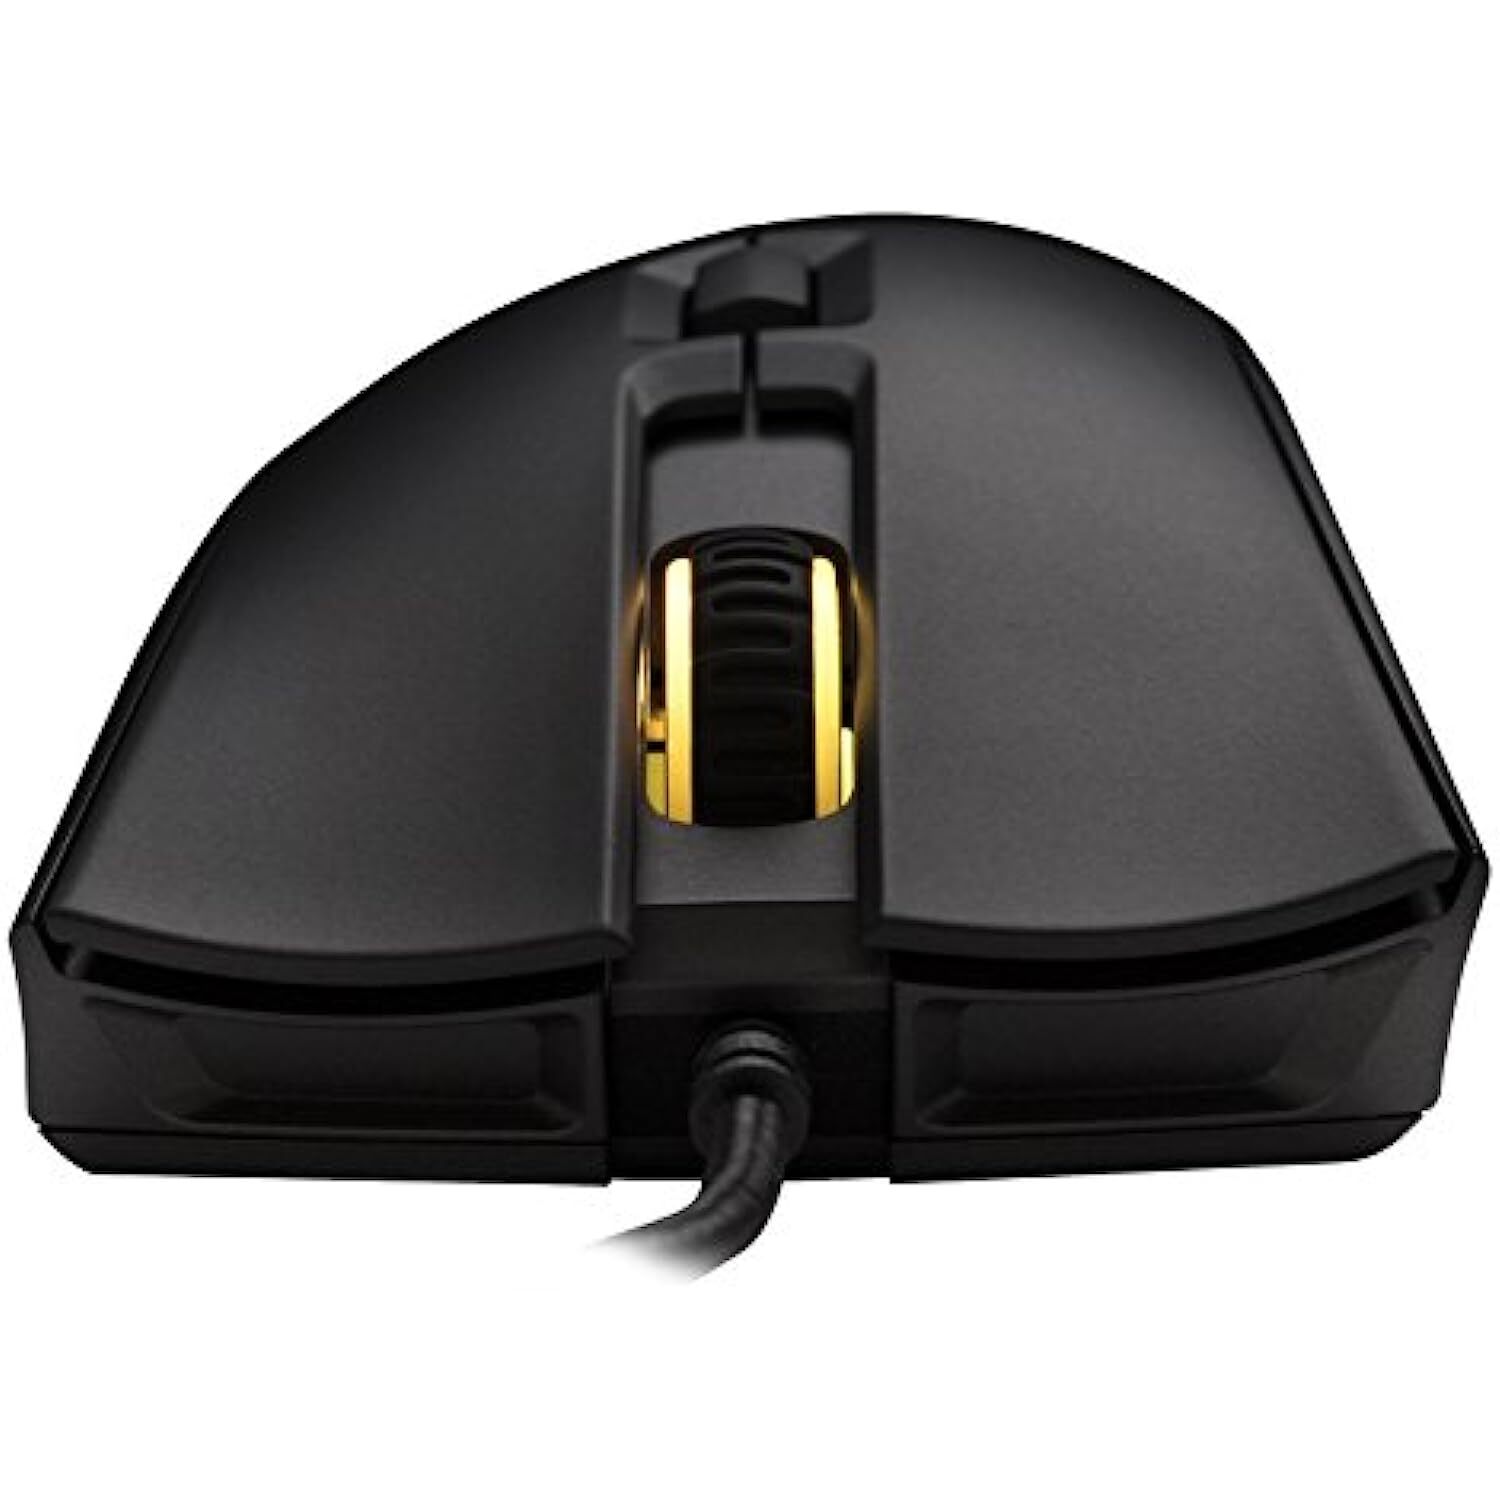 HyperX Pulsefire FPS Pro USB Gaming Mouse, Software Controlled RGB Light Effects & Macro Customization, Pixart 3389 Sensor Up to 16,000 DPI, 6 Programmable Buttons - Black (HX-MC003B)